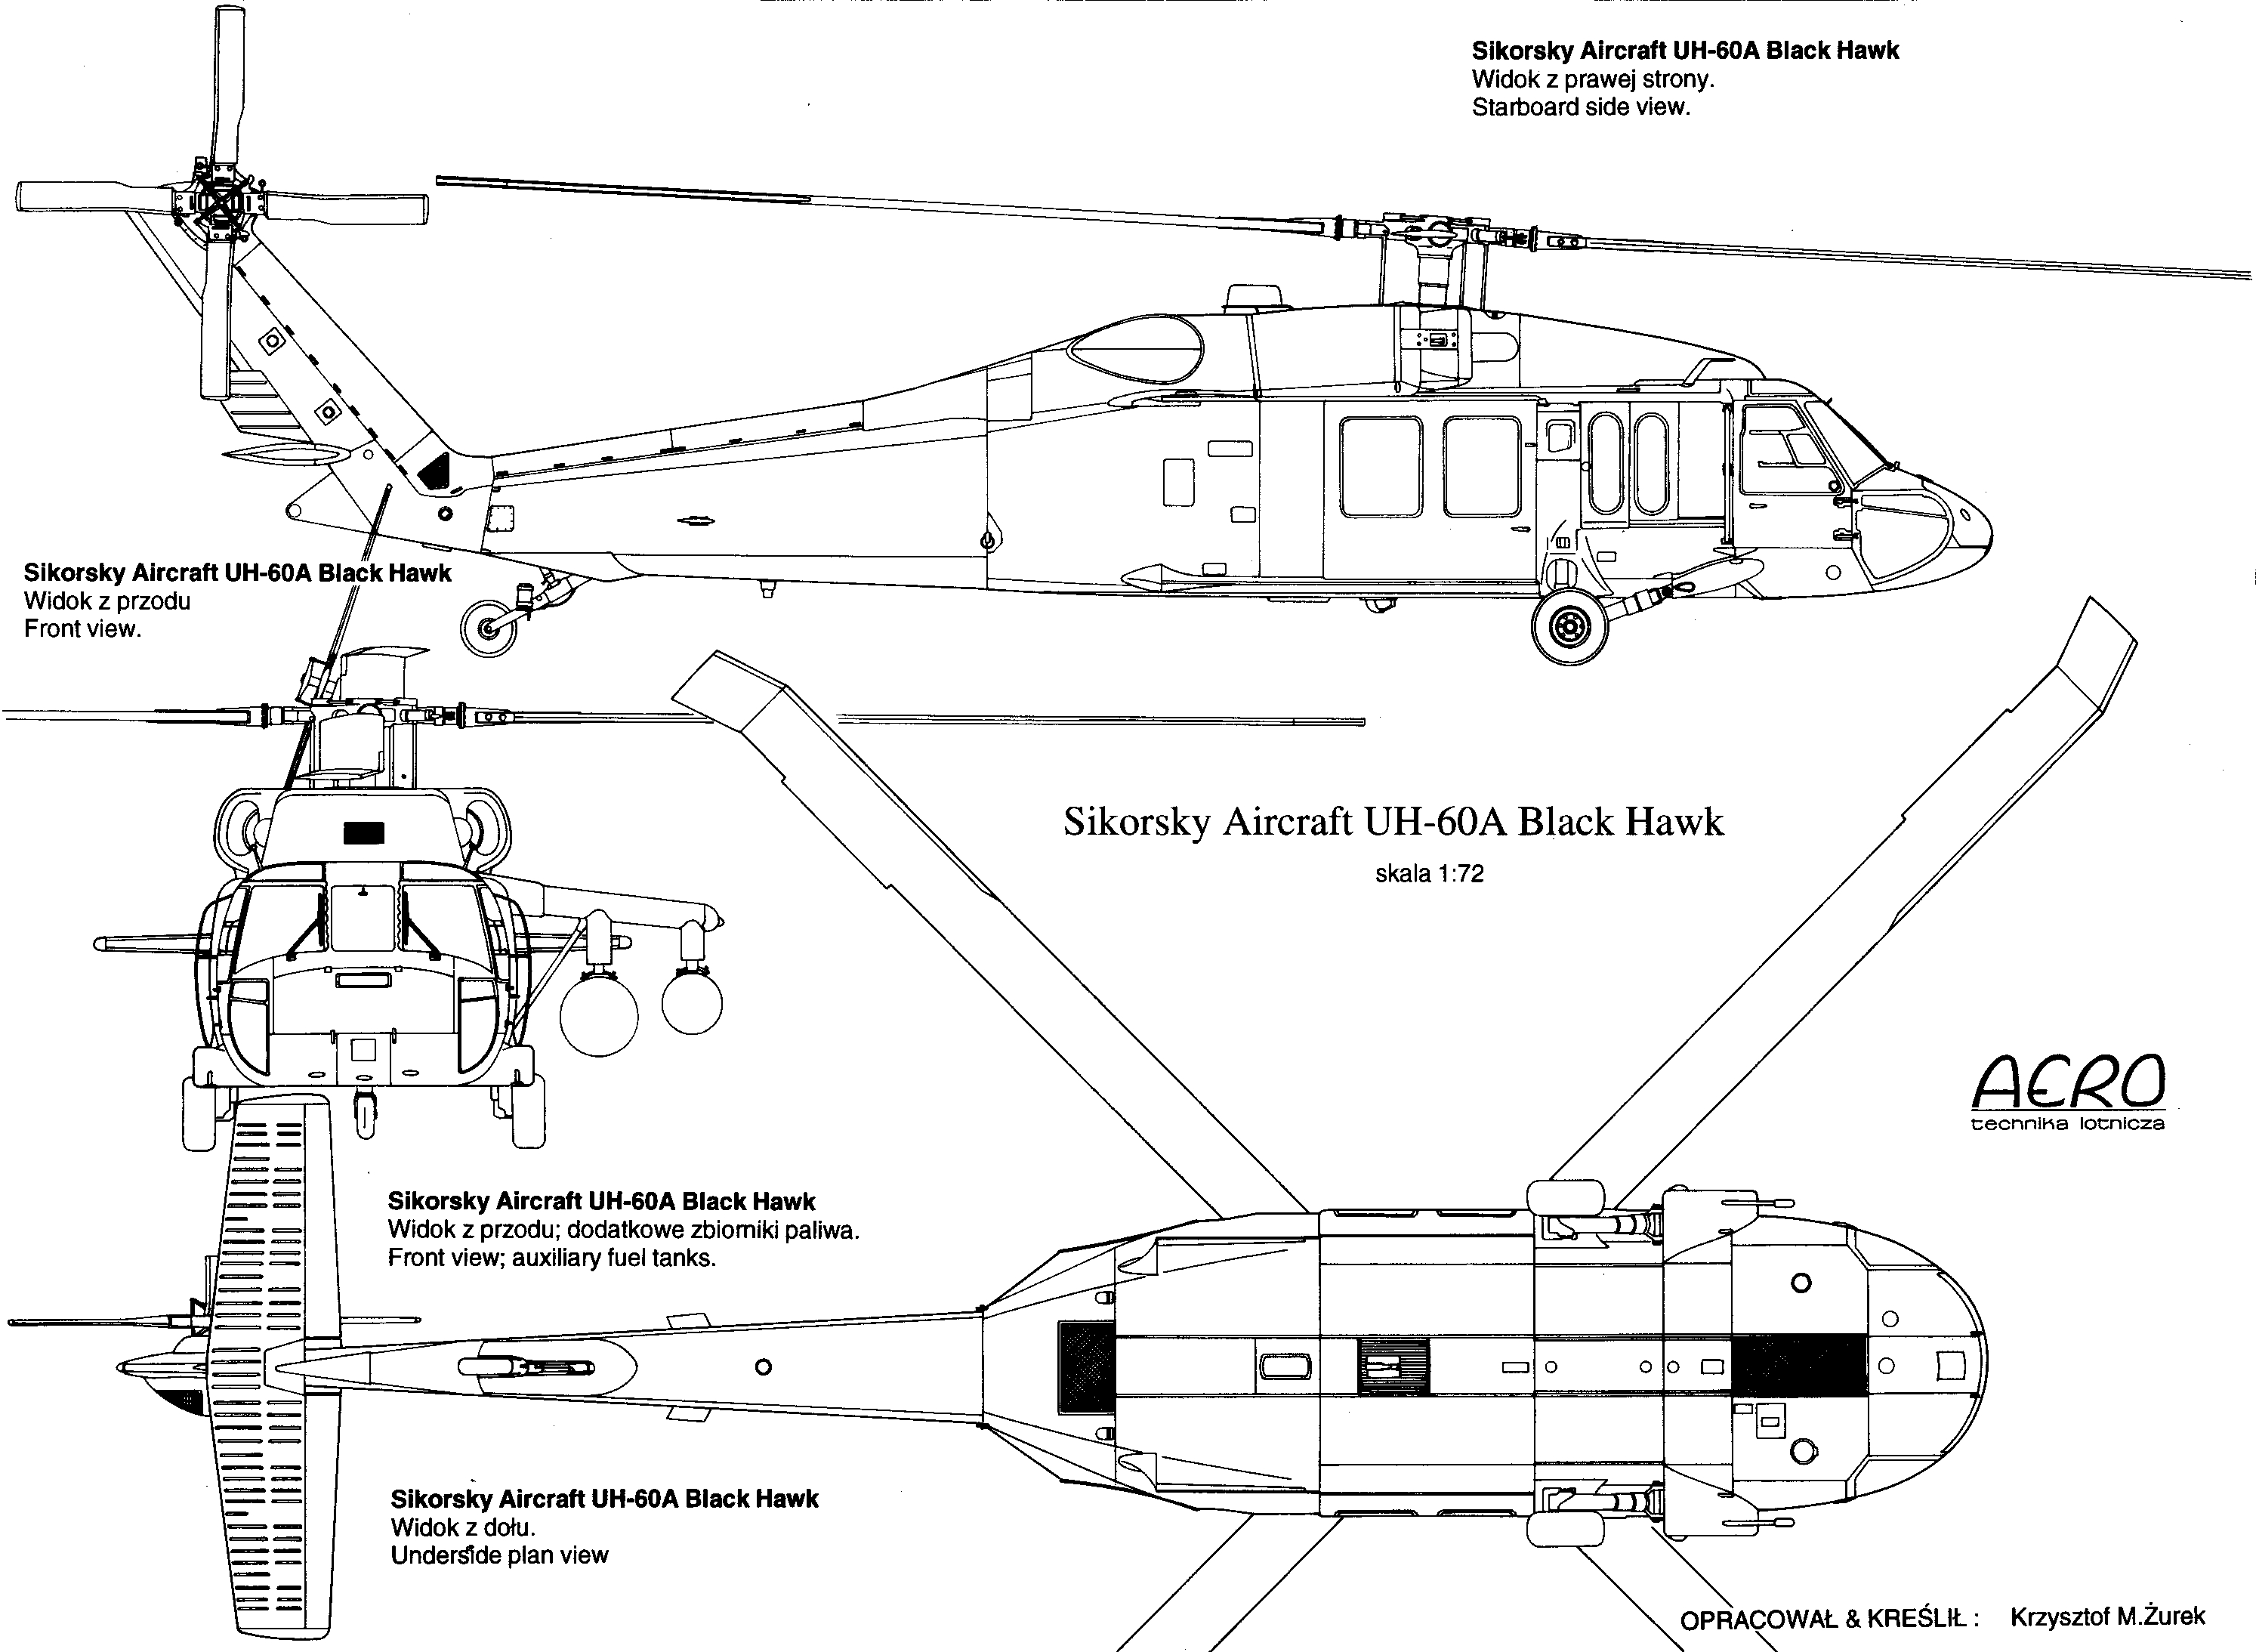 Sikorsky uh-60 черный ястреб - frwiki.wiki